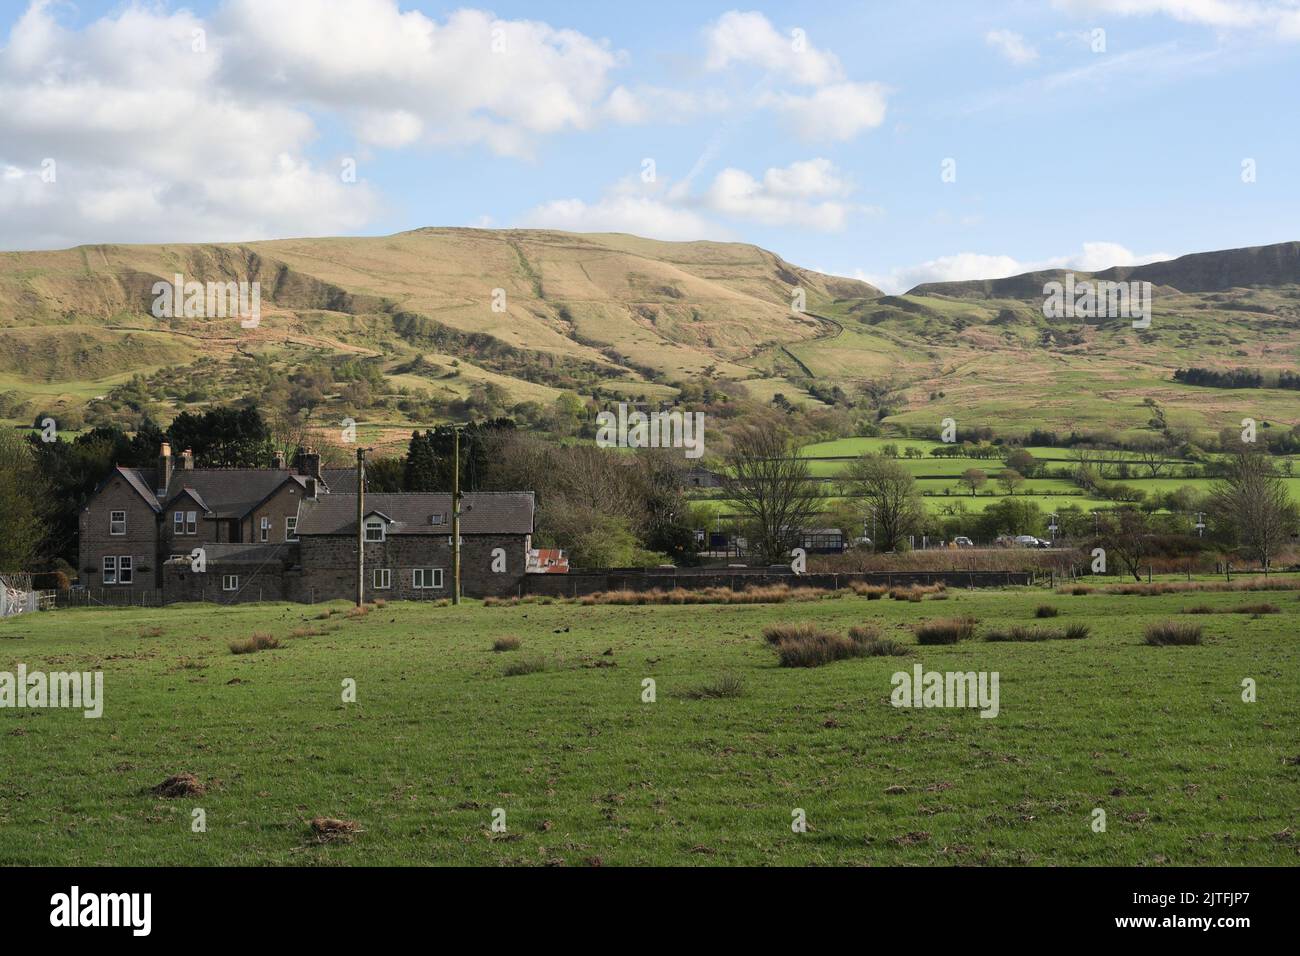 Vista del paisaje de Mam Tor desde Edale en Peak District, Derbyshire, Inglaterra, paisaje rural inglés Foto de stock